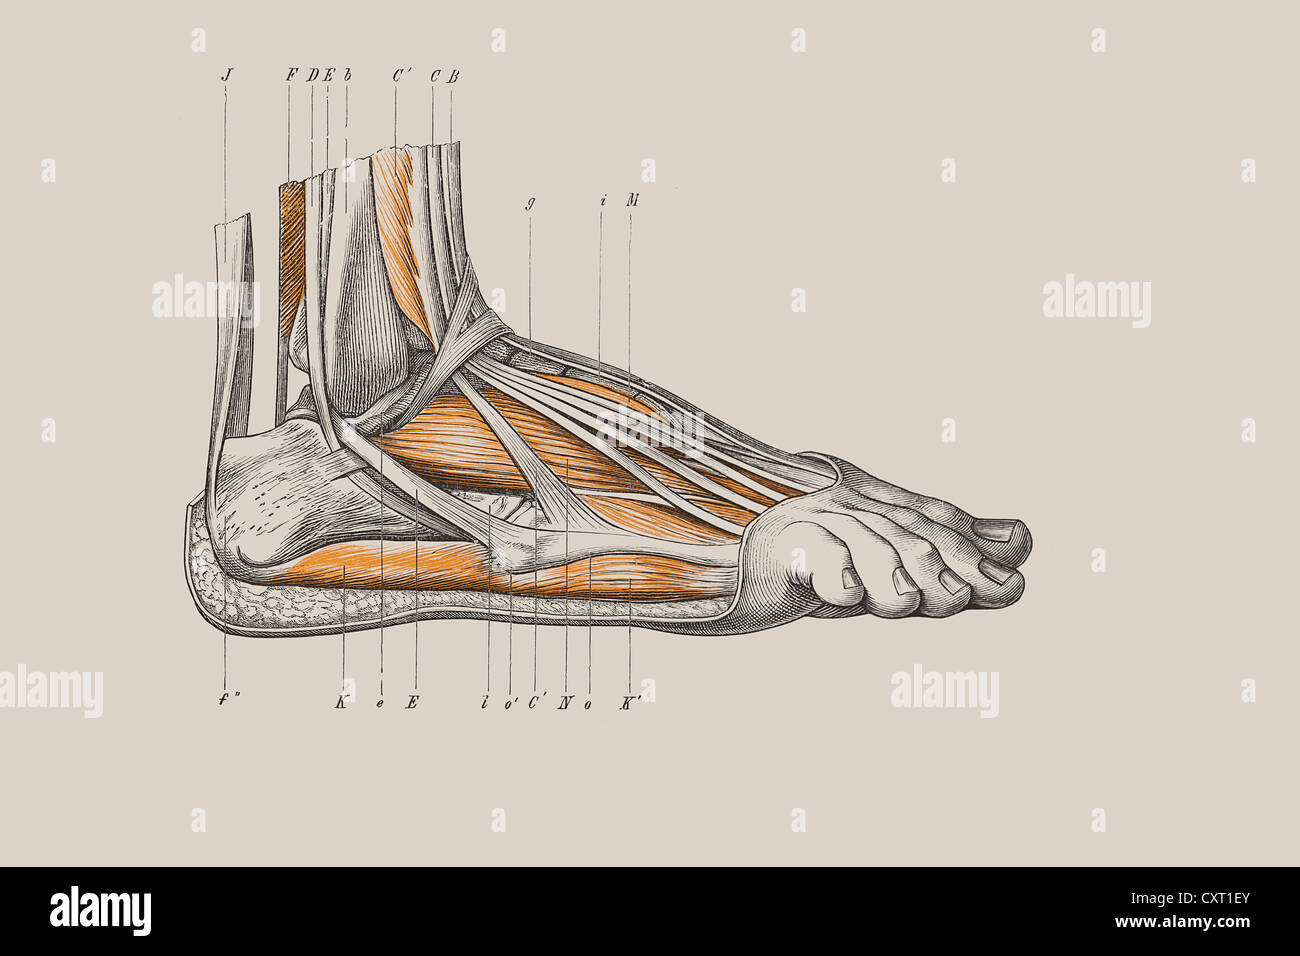 Skeleton of a human foot, anatomical illustration Stock Photo